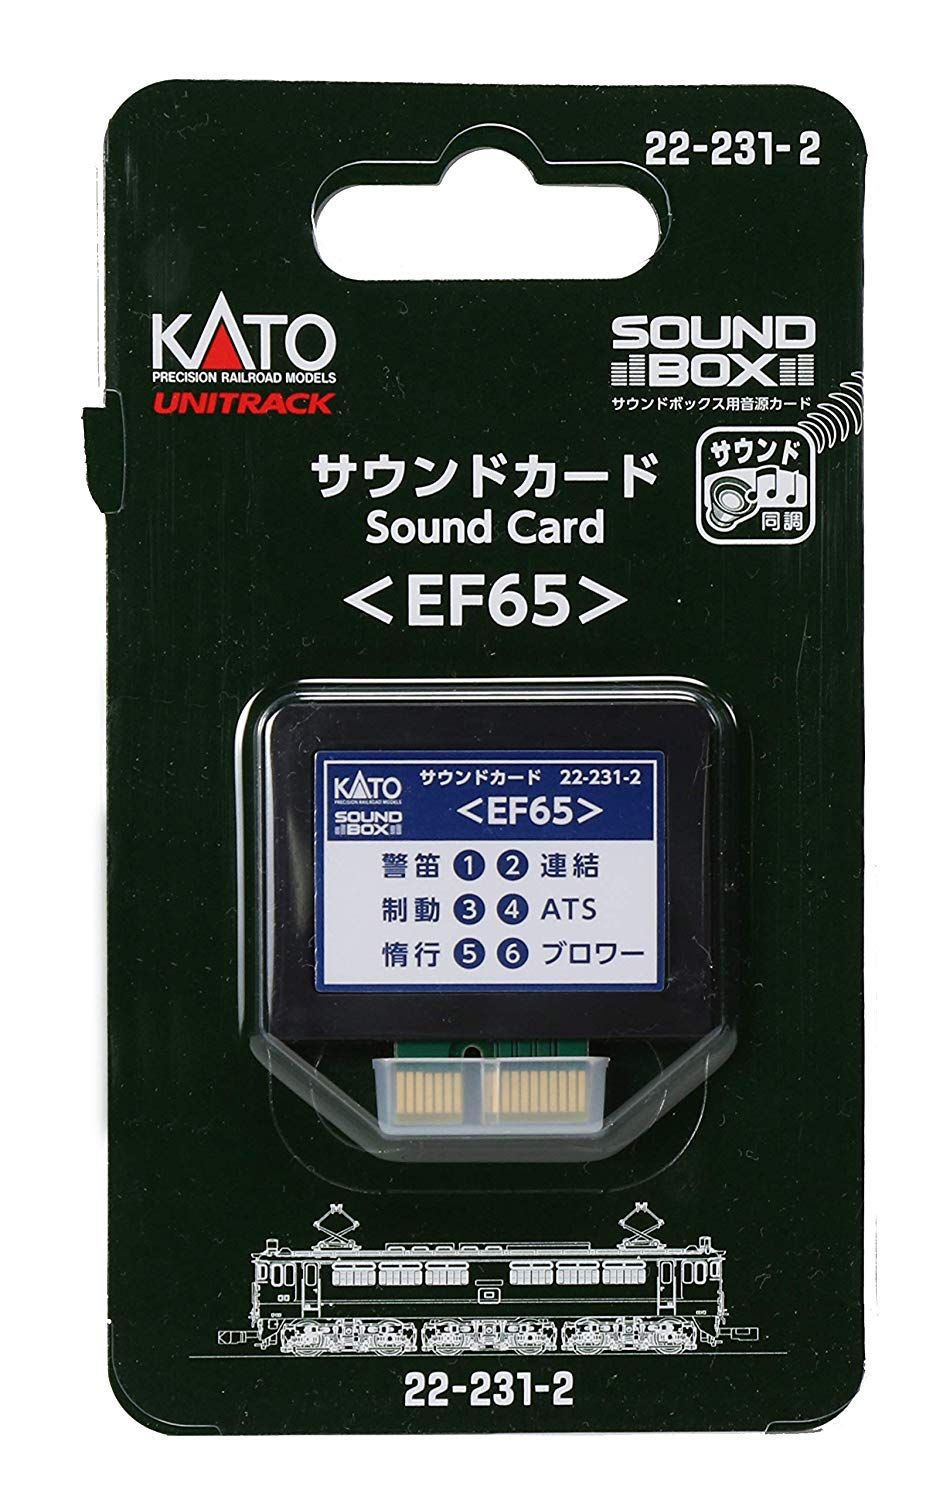 KATO 22-231-2 Unitrack Sound Card `EF65` [for Sound Box] - BanzaiHobby